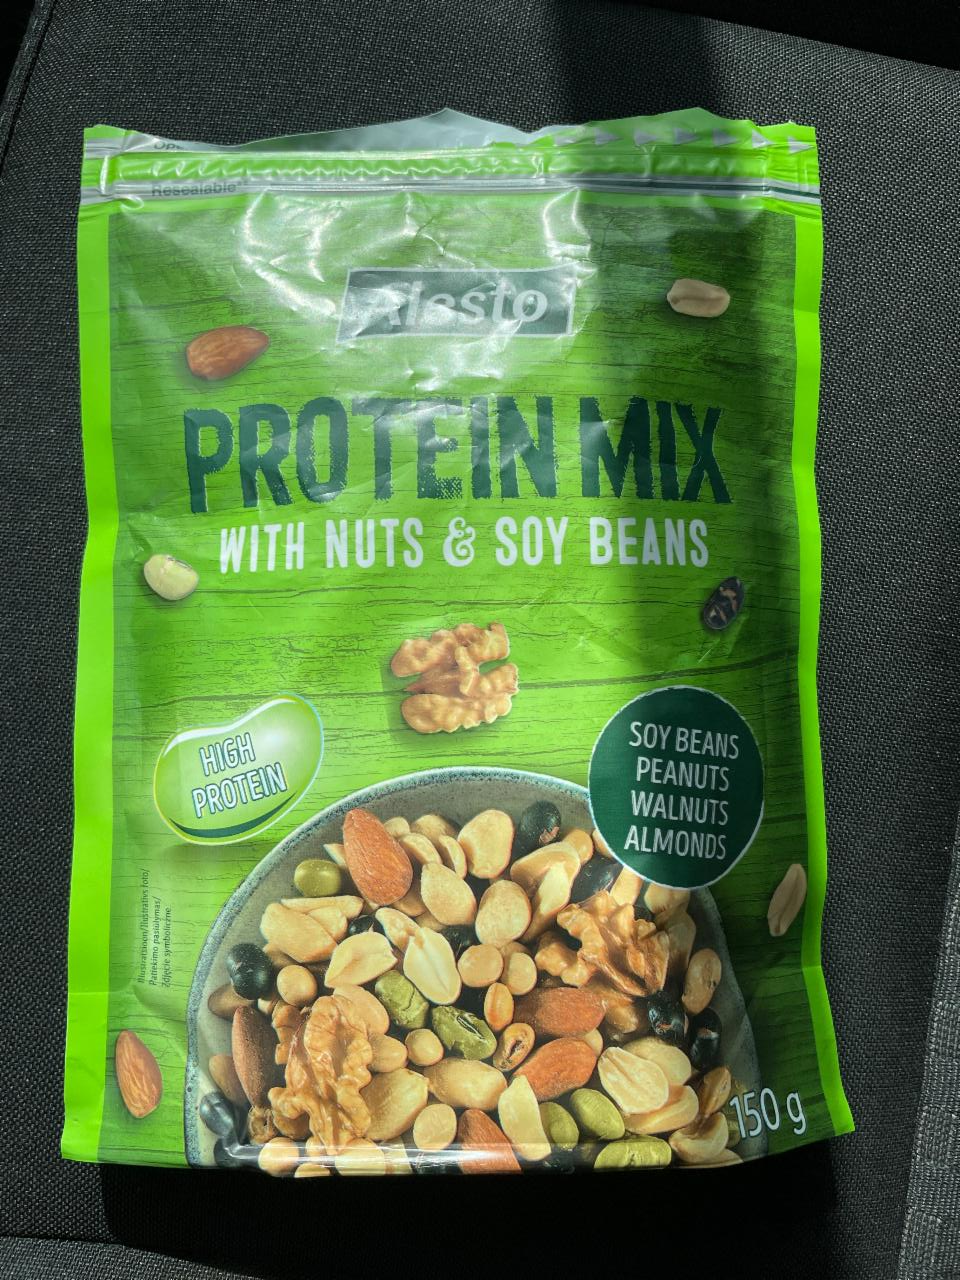 Zdjęcia - Alesto Protein Mix with nuts soy beans